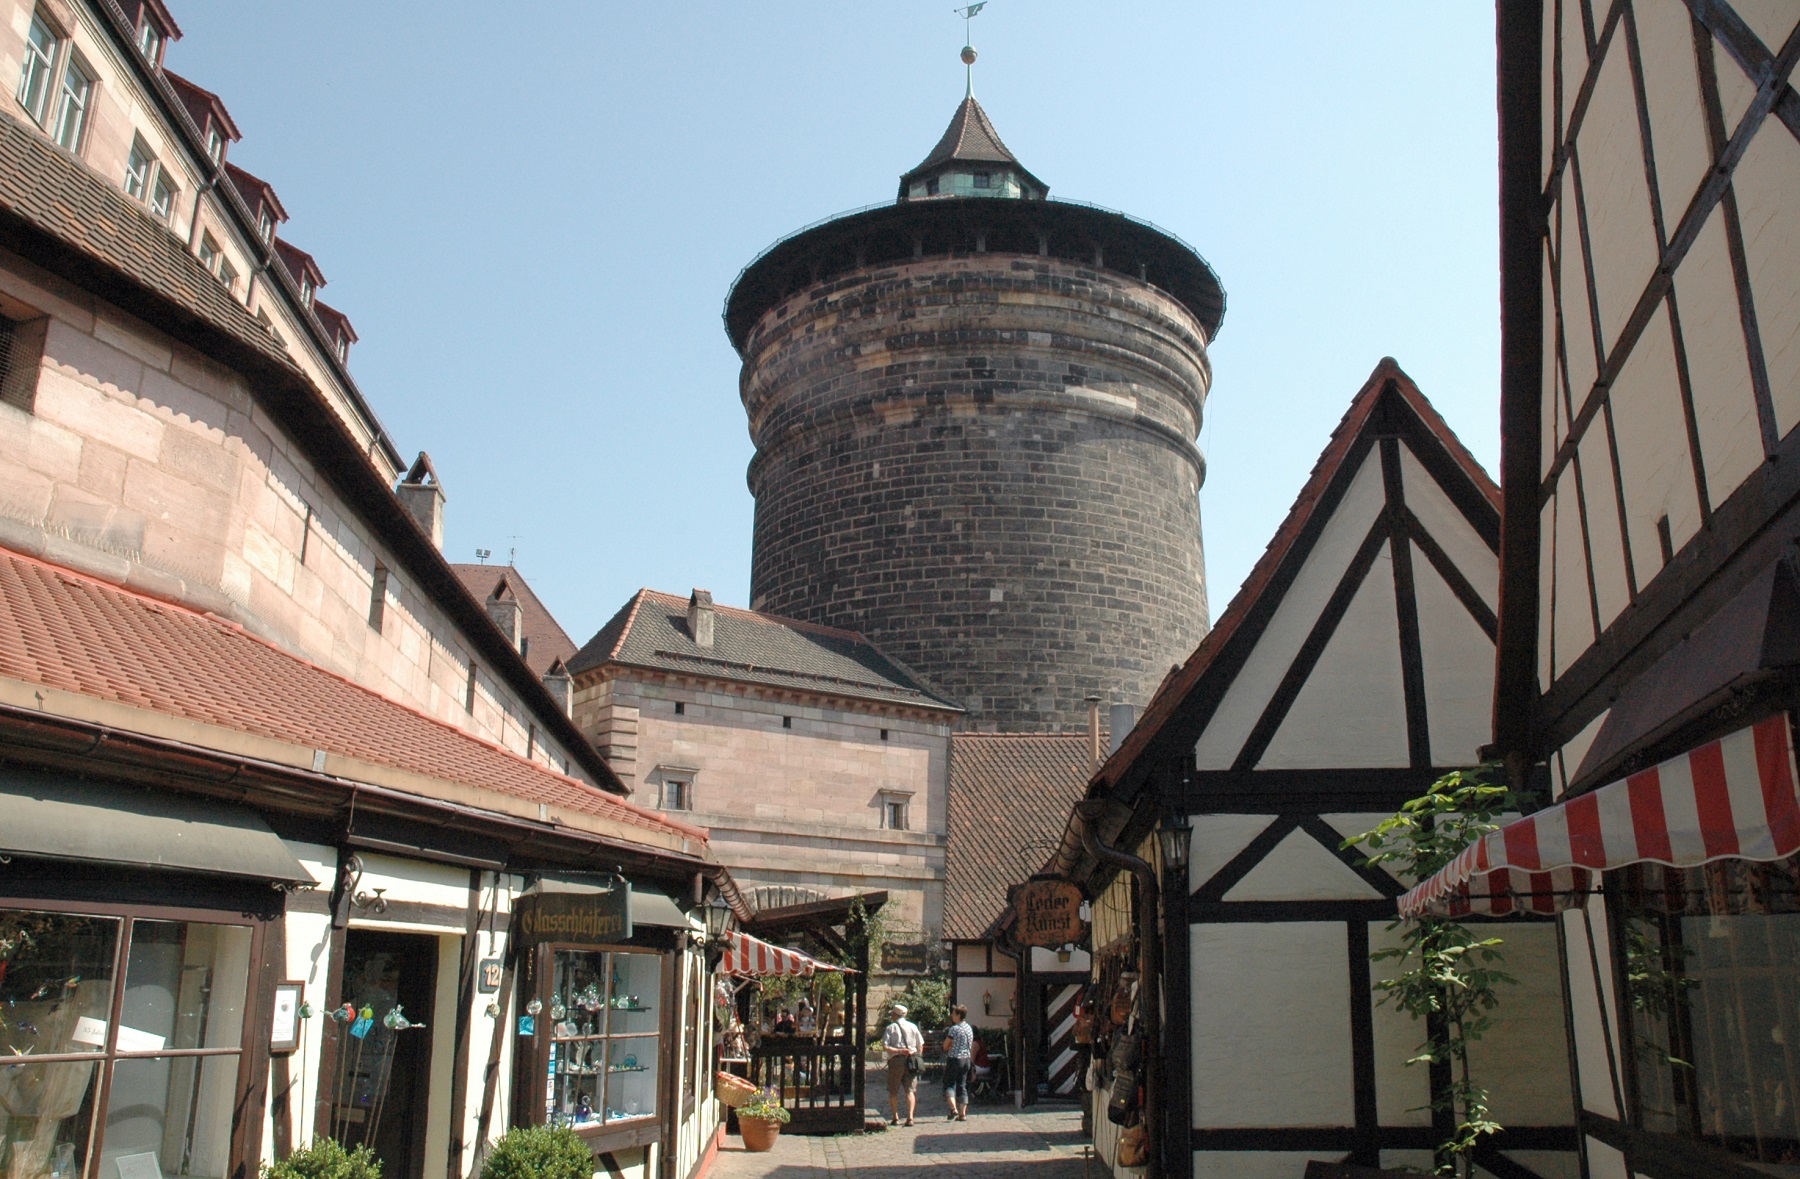 King's Gate, Nuremberg